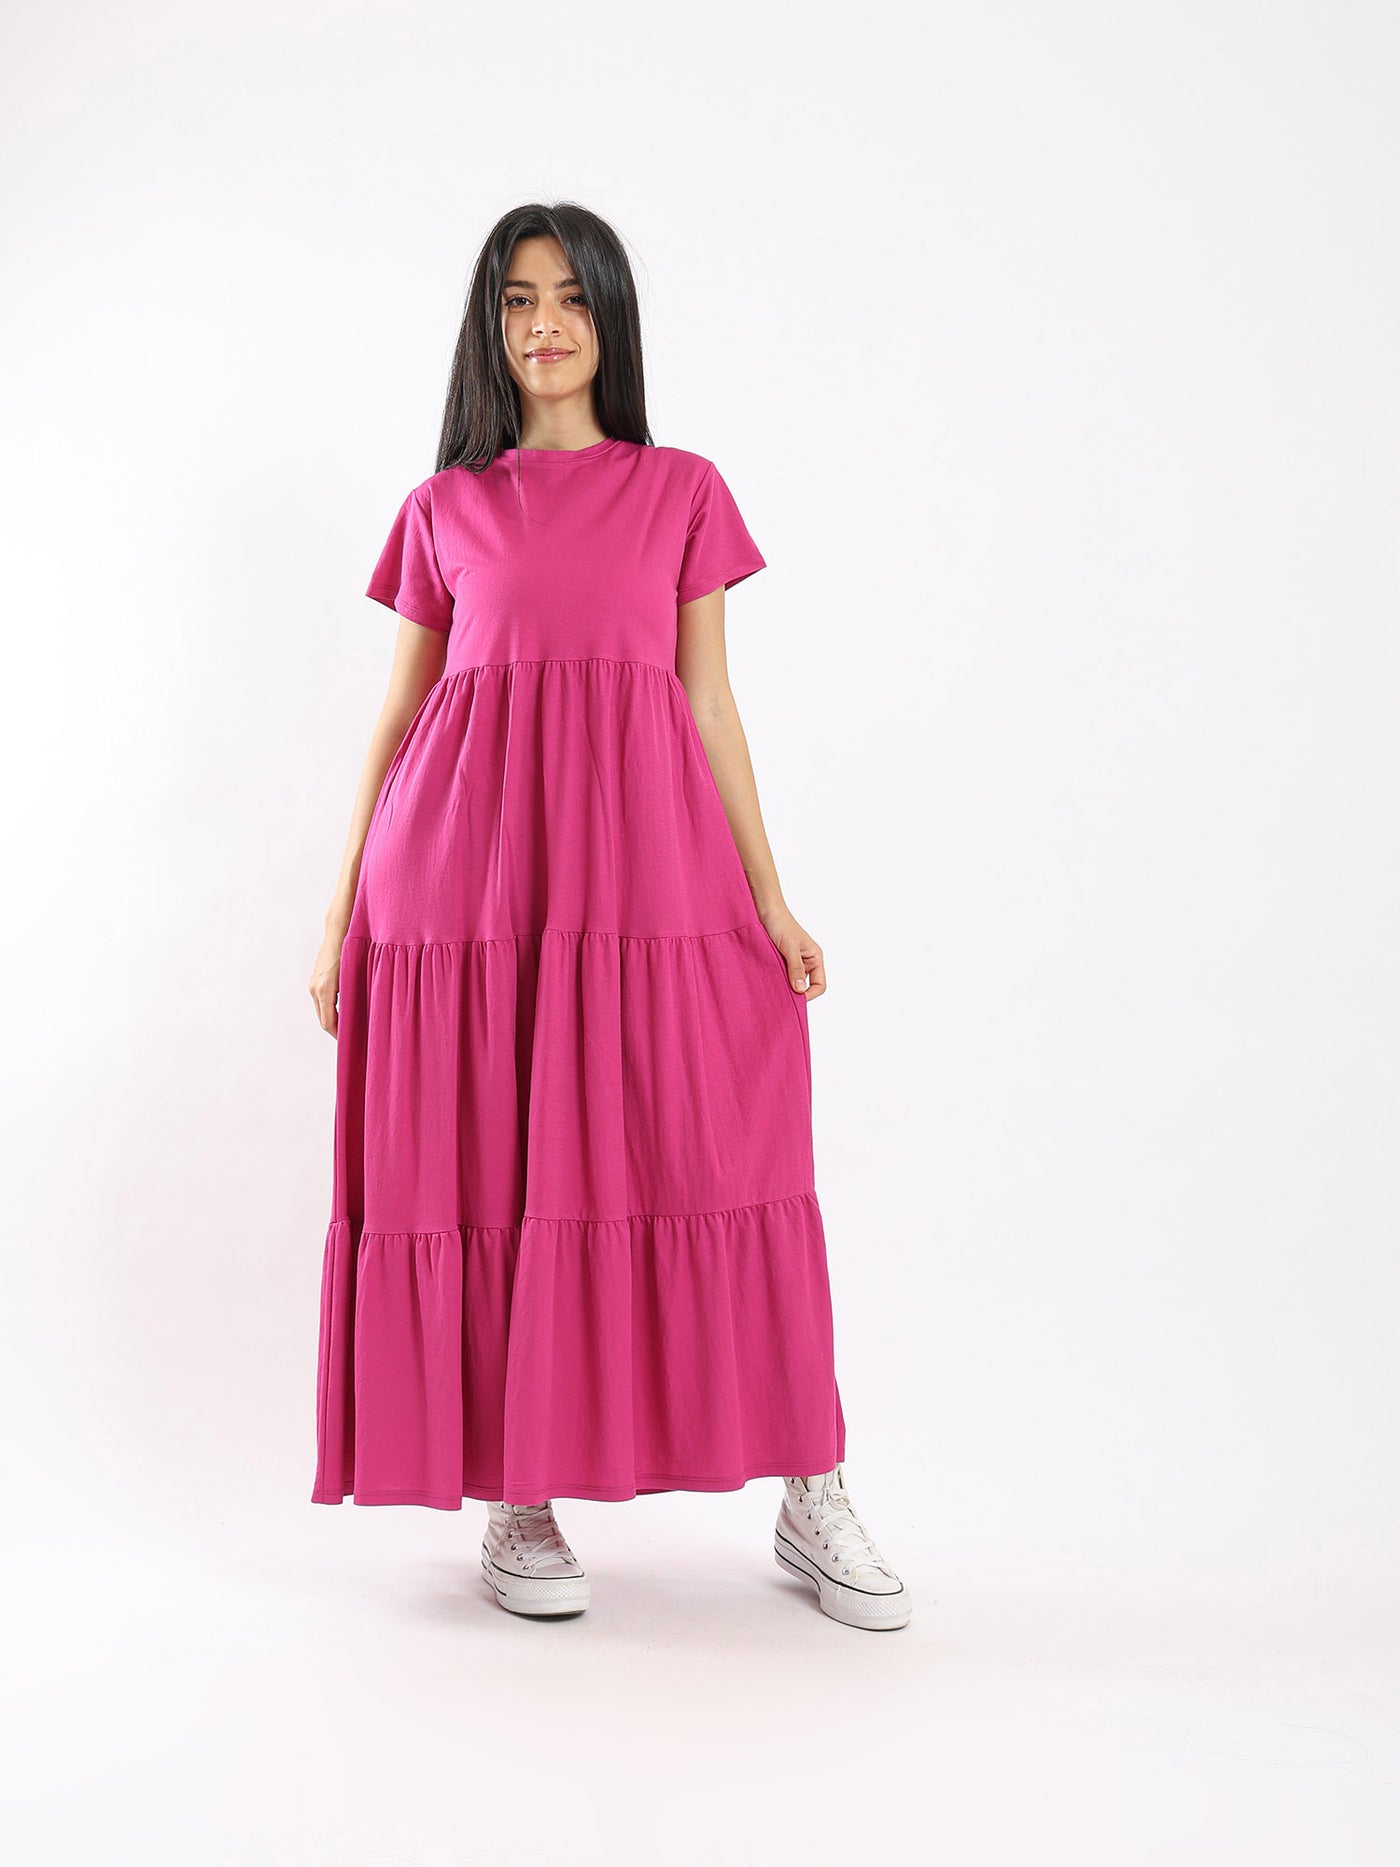 Dress - Frill Design - Half Sleeve